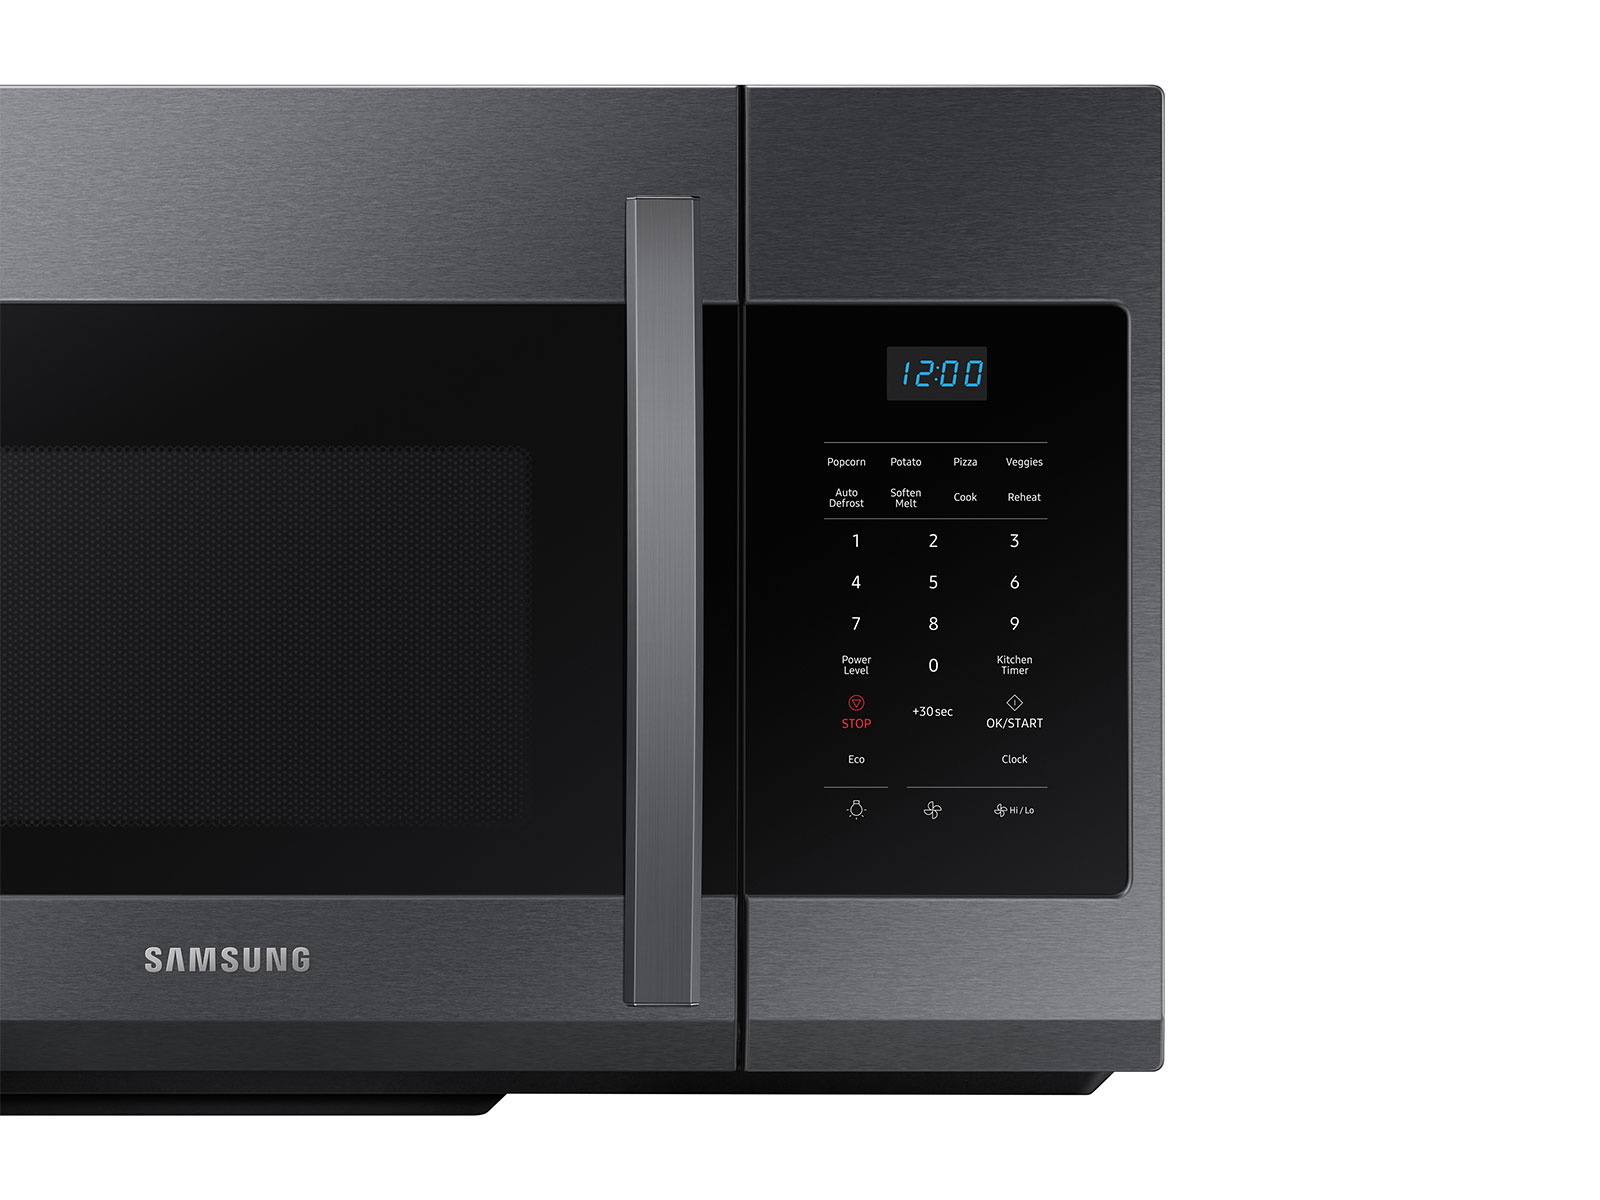 https://image-us.samsung.com/SamsungUS/home/home-appliances/microwaves/over-the-range/pdp/-me17r7021e/stssblack/PDP-GALLERY-R7021-010-Stss-black-1600x1200.jpg?$product-details-jpg$